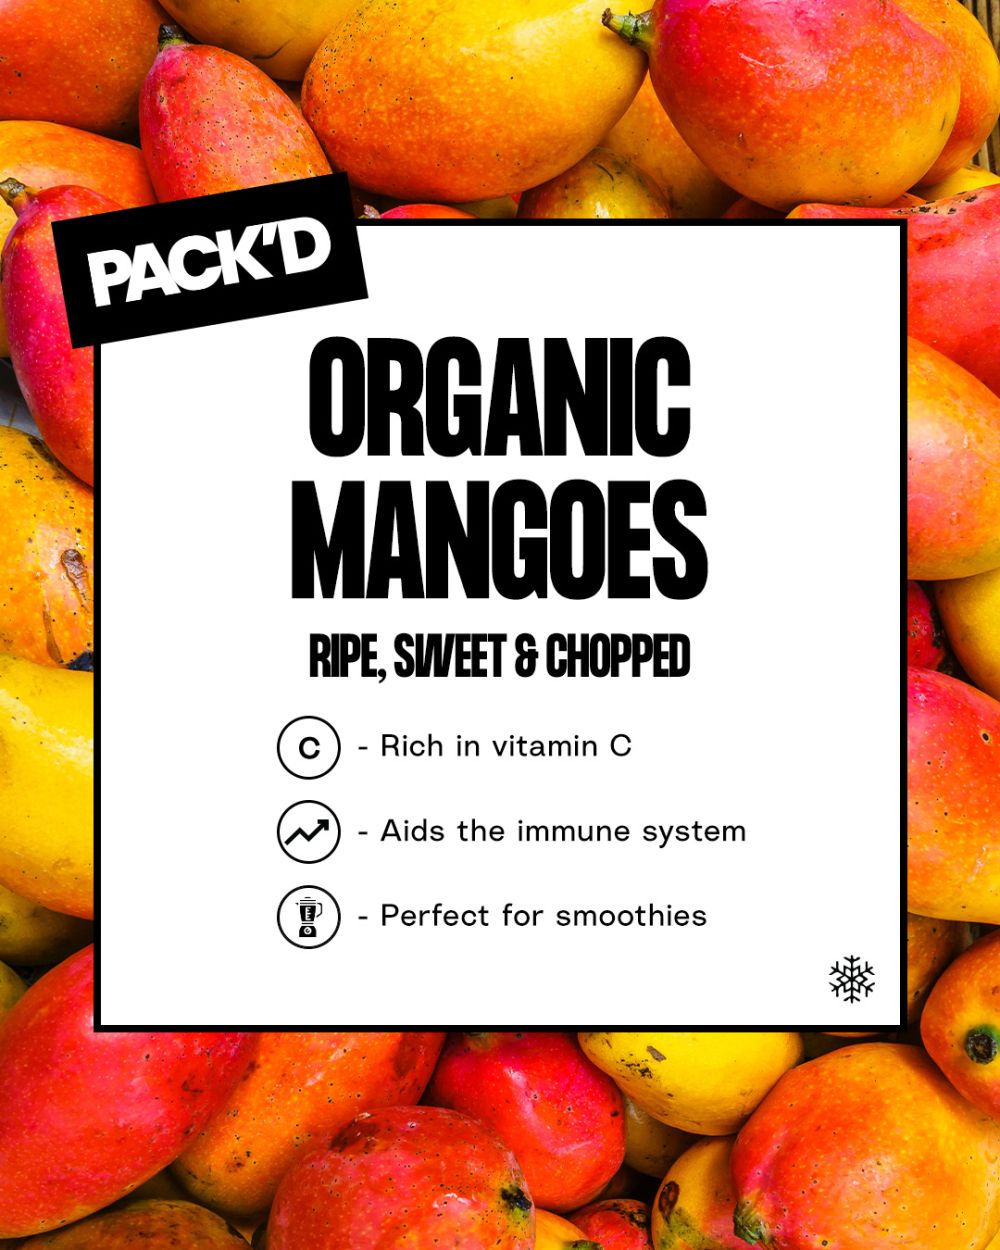 packd_fruits_mangoes.